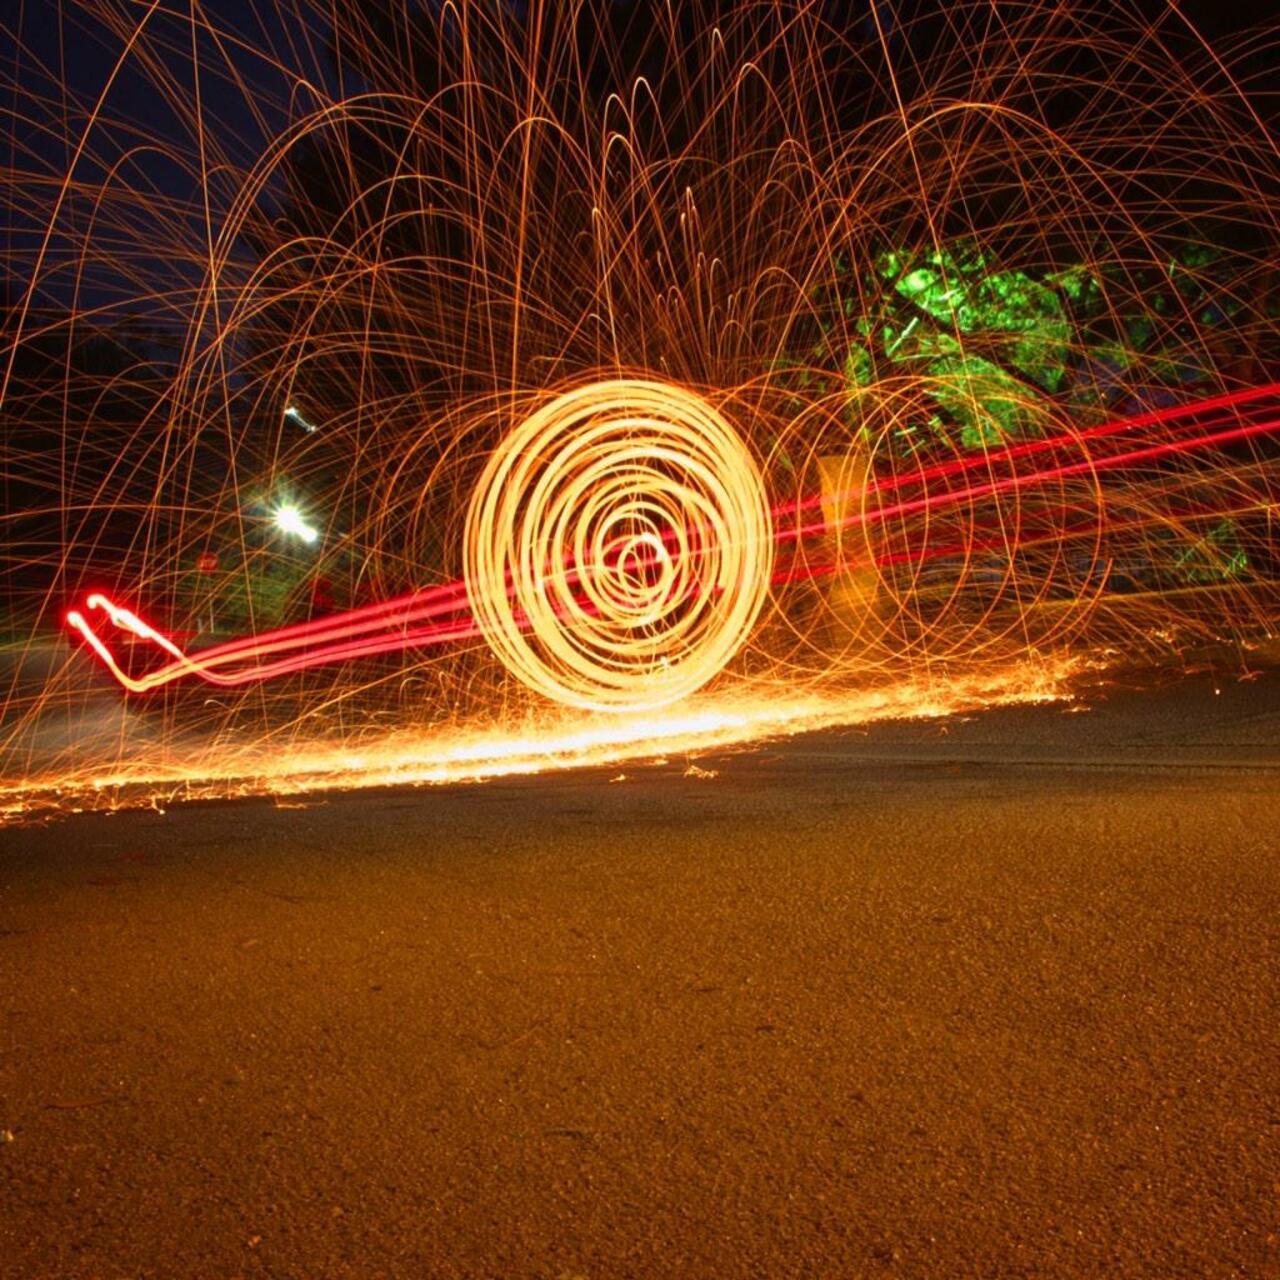 Touch of Red #abatract #lightpainting #lightart #steelwool #spinz #night #nightphotography #sparks http://t.co/tvJAJADJ1P